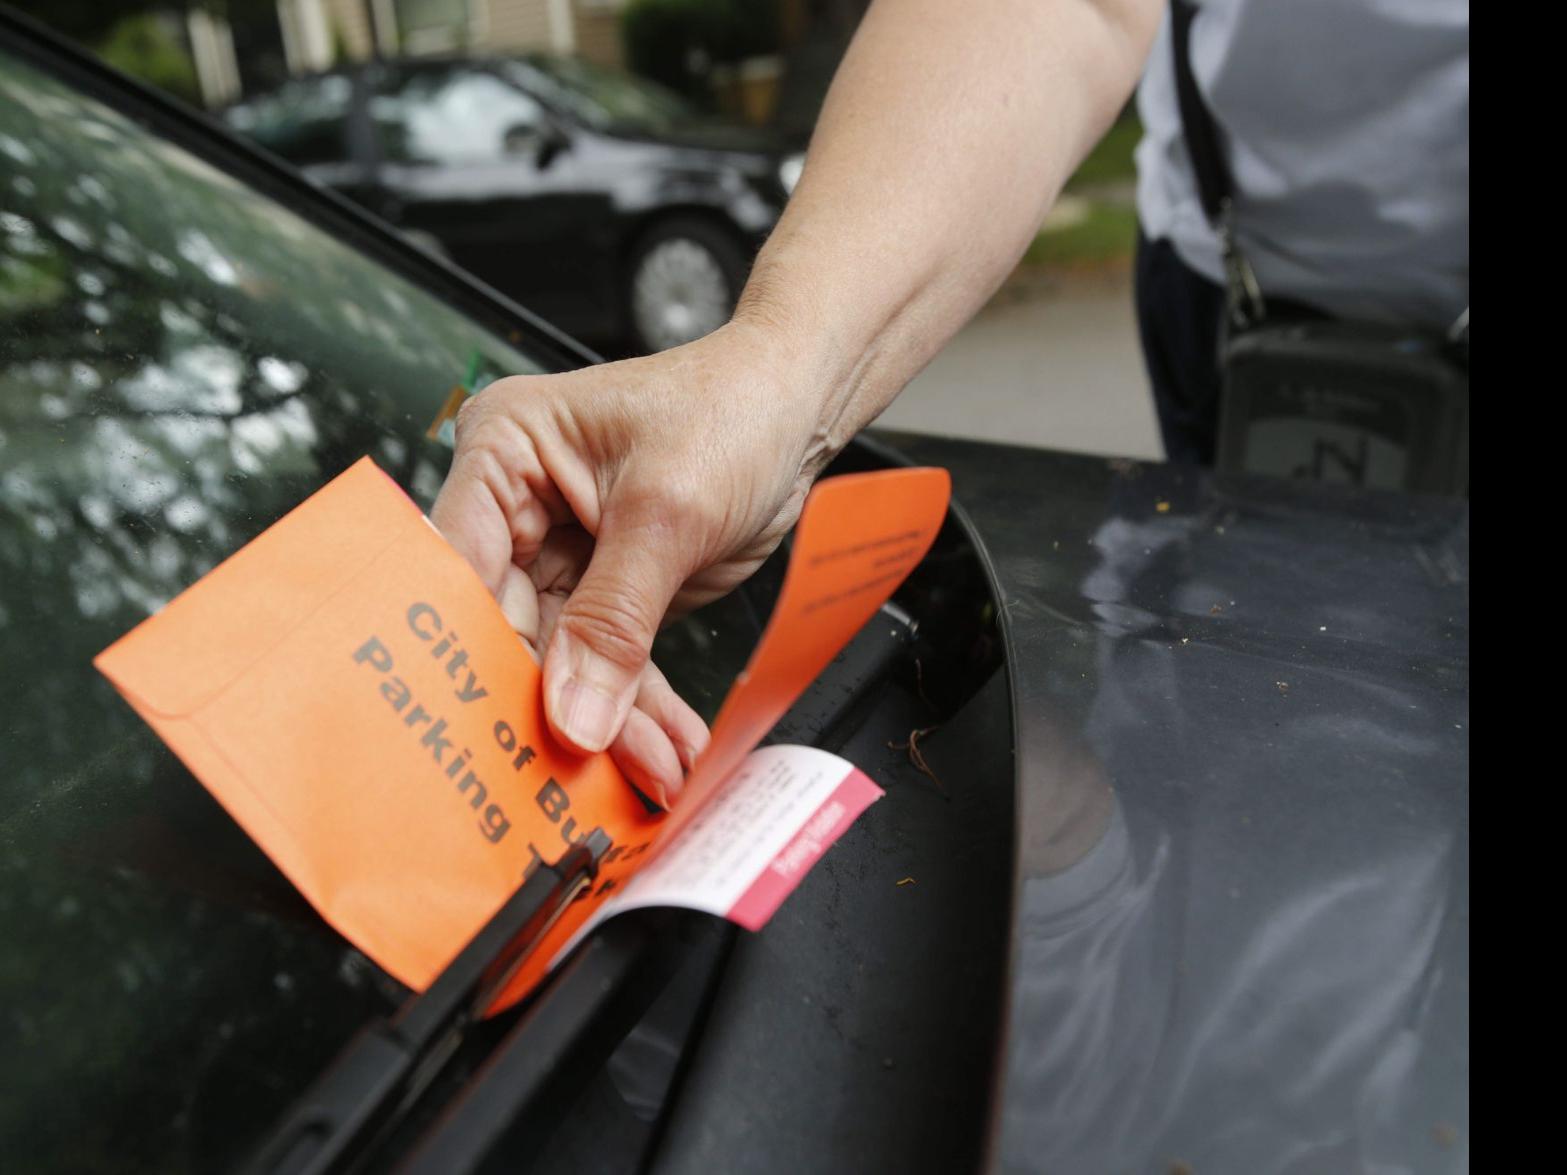 Buffalo parking violators, take heart: Your could be worse | Local News buffalonews.com